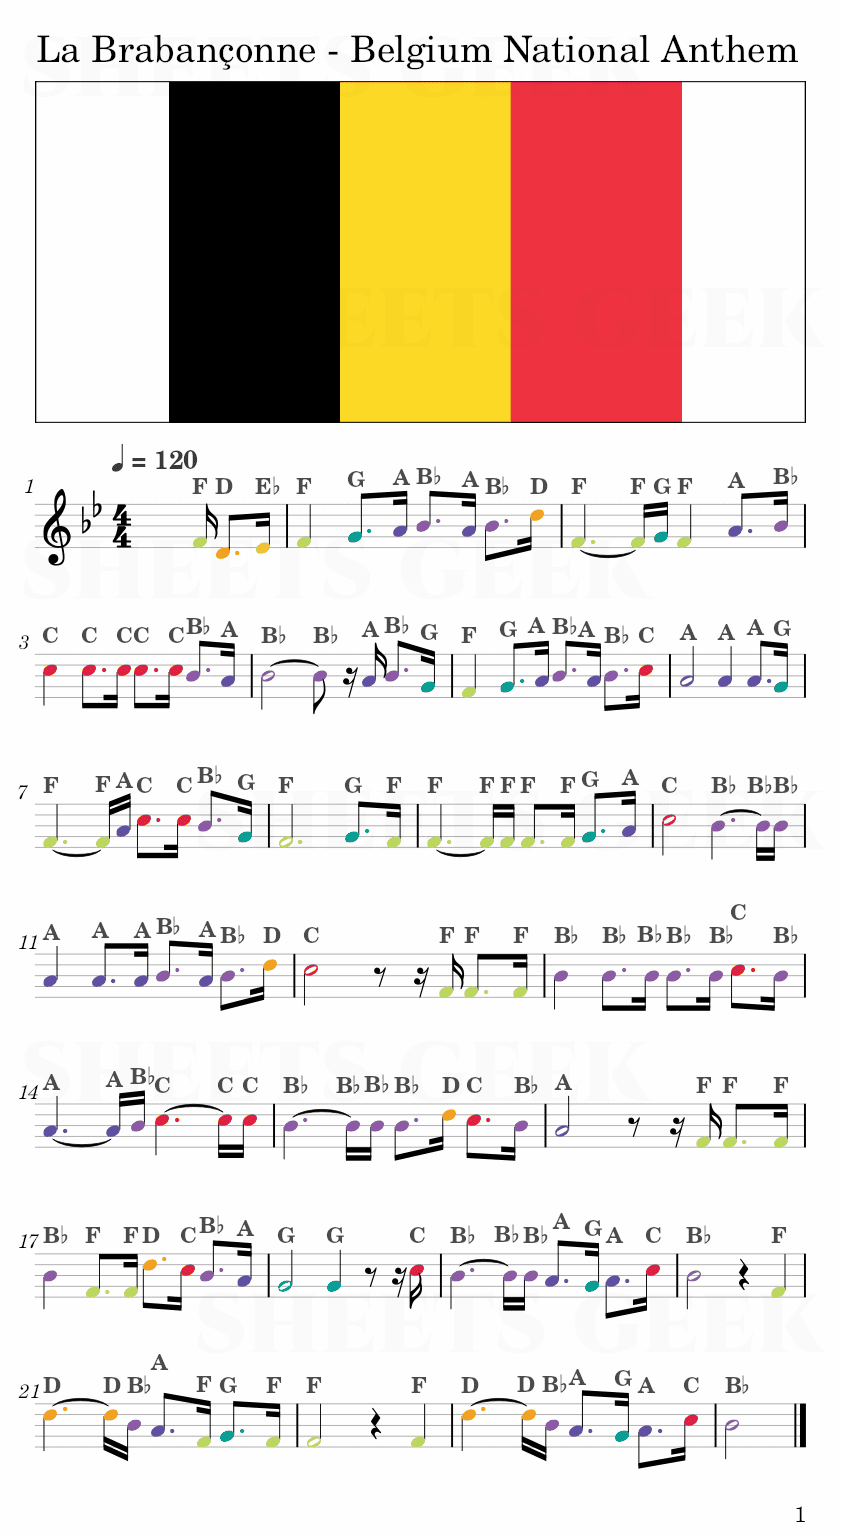 La Brabançonne - Belgium National Anthem Easy Sheet Music Free for piano, keyboard, flute, violin, sax, cello page 1